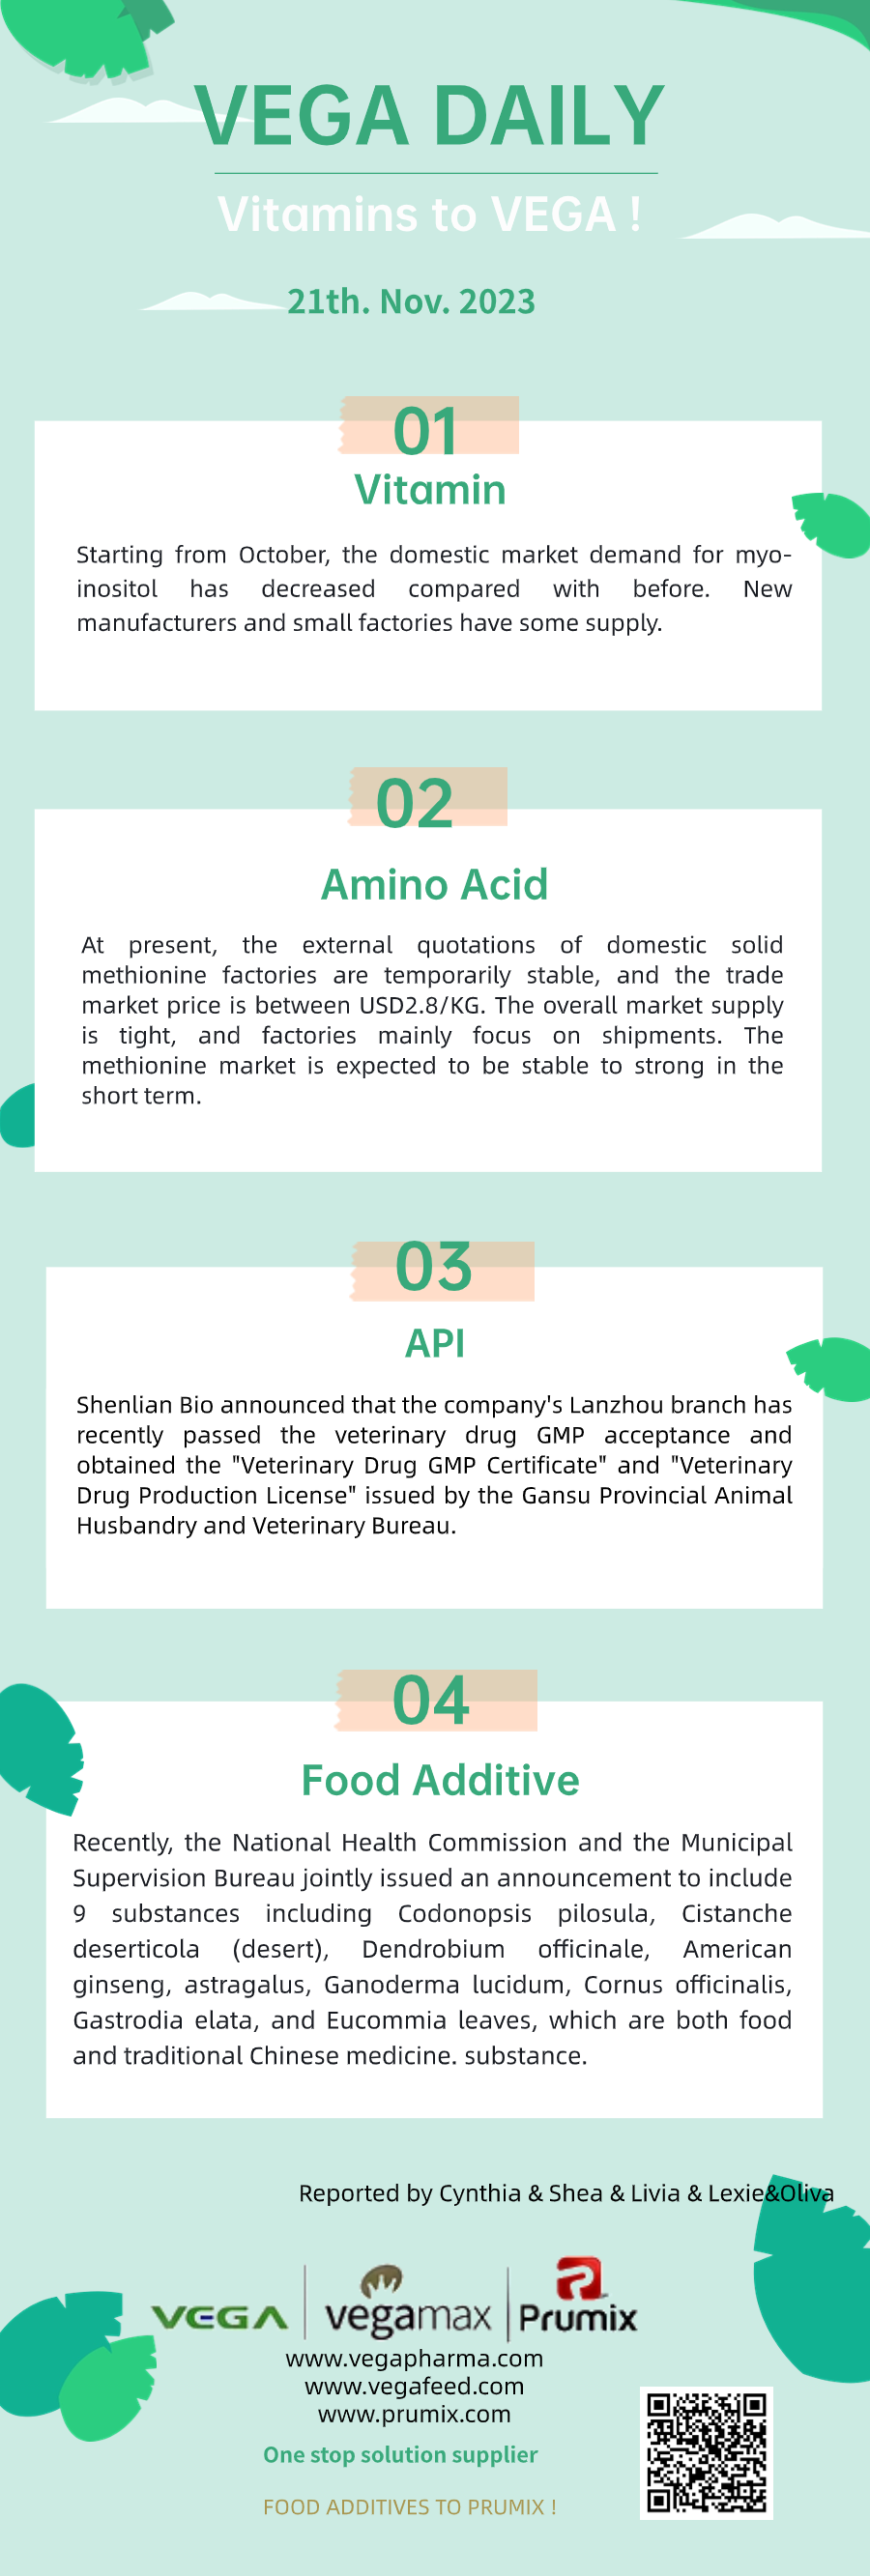 Vega Daily Dated on Nov 21st 2023 Vitamin Amino Acid API Food Additives.png